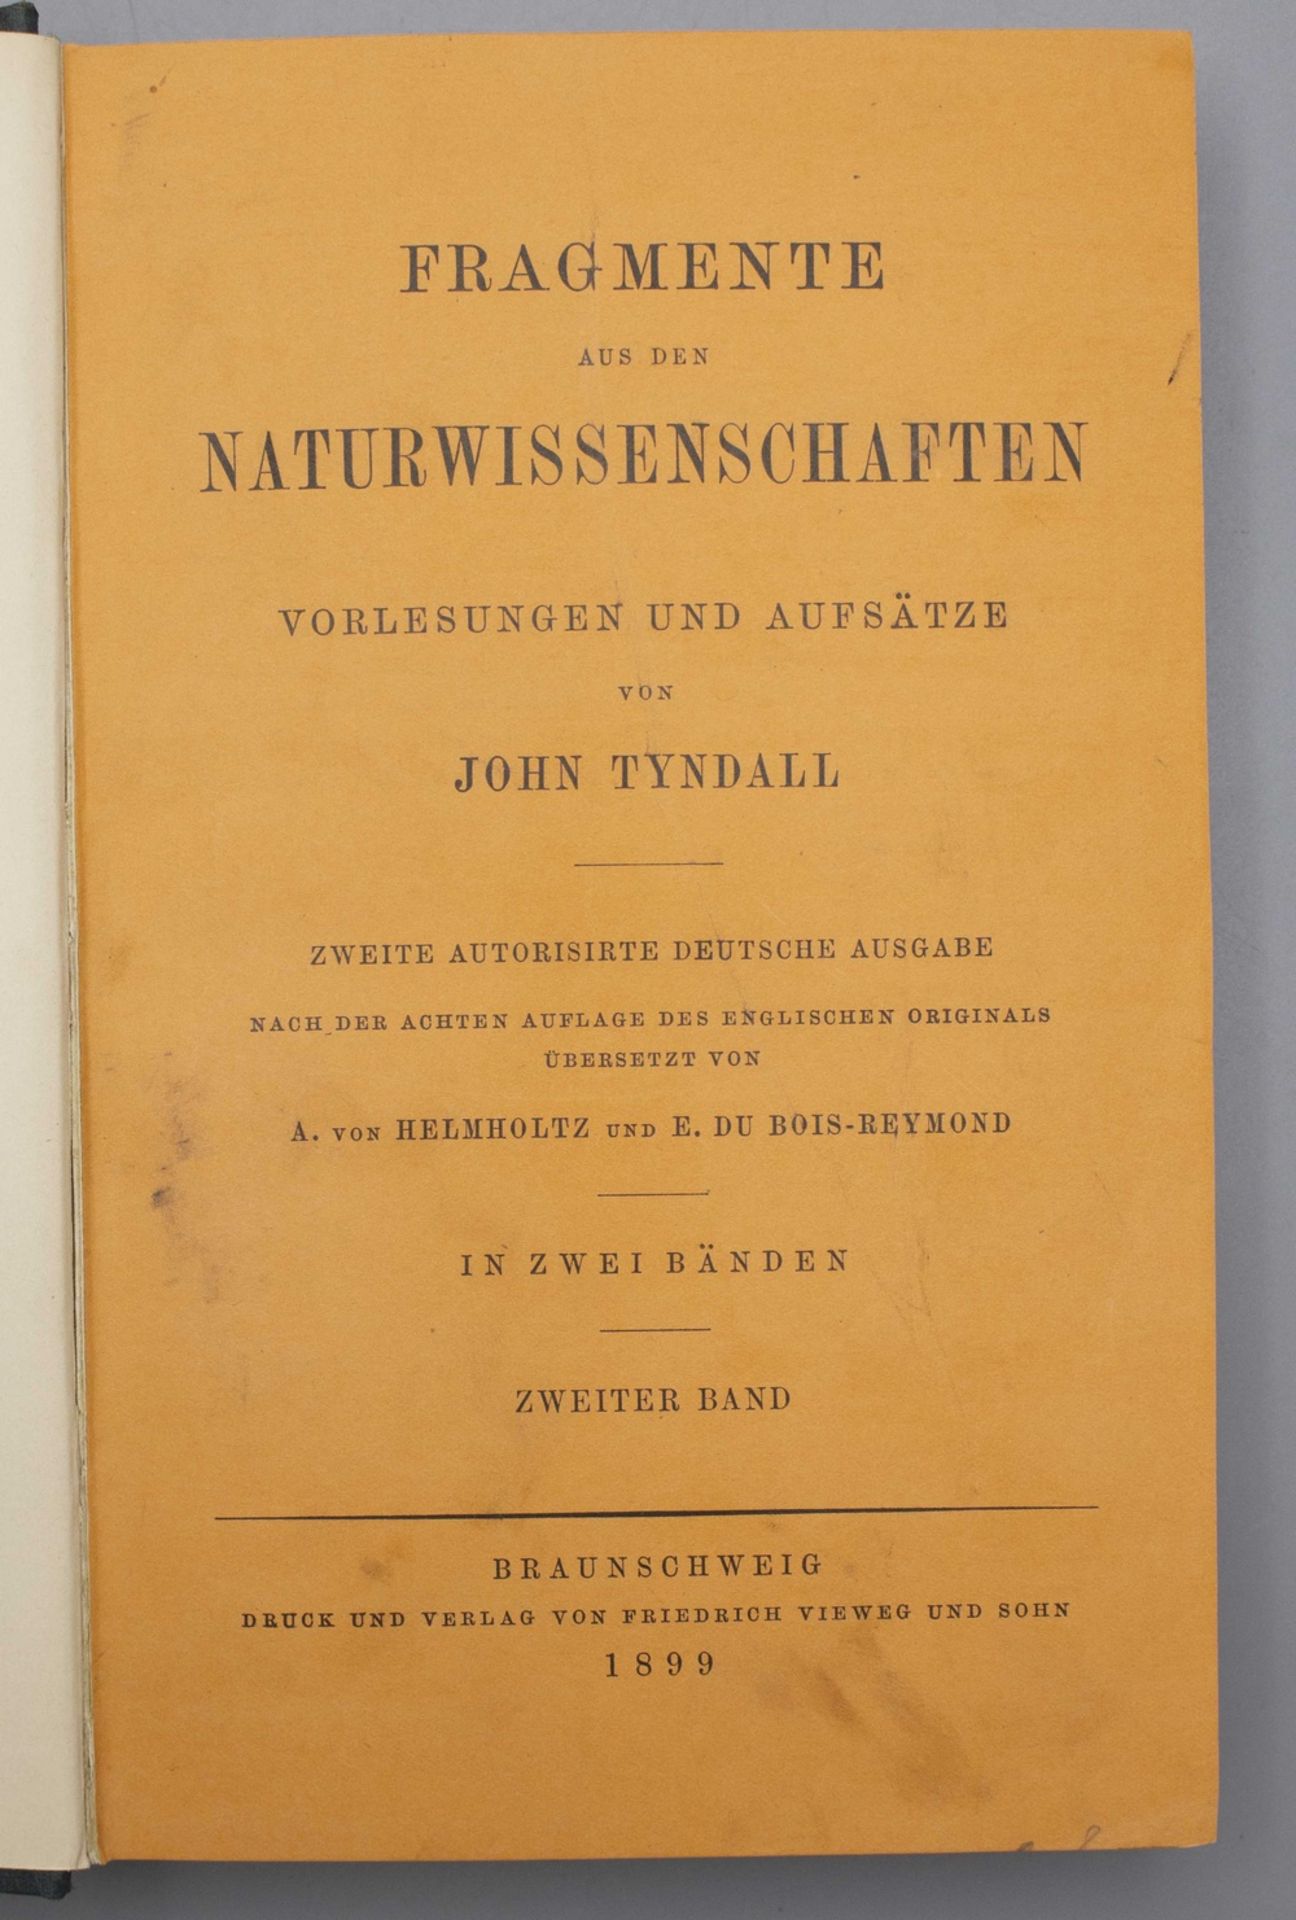 John Tyndall: 'Fragmente aus den Naturwissenschaften', Braunschweig, 1898 - Image 5 of 6